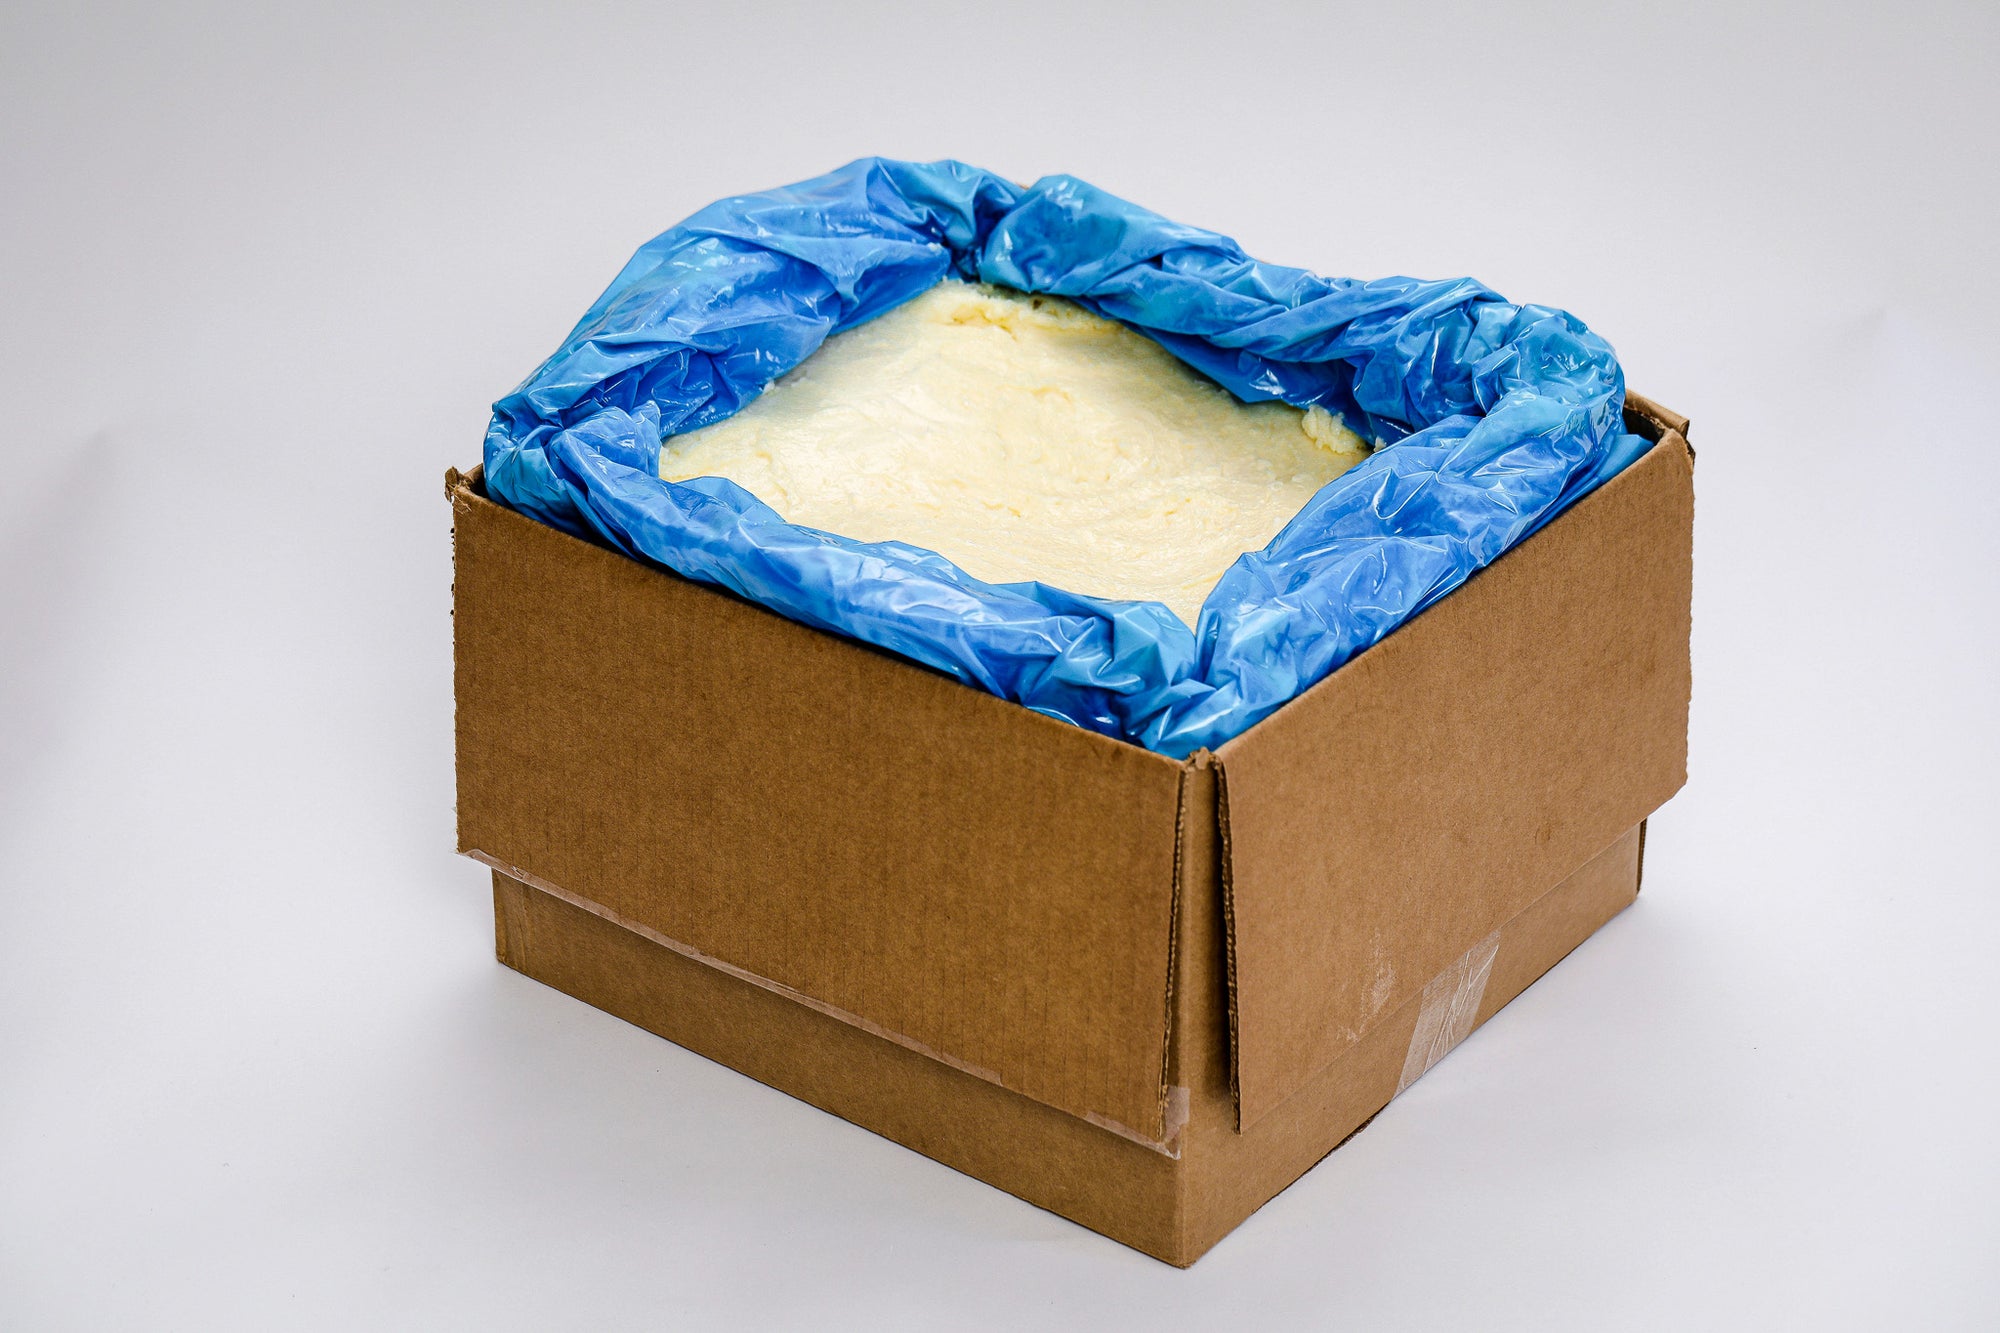 Epicurean Butter 30 lb bag in a box